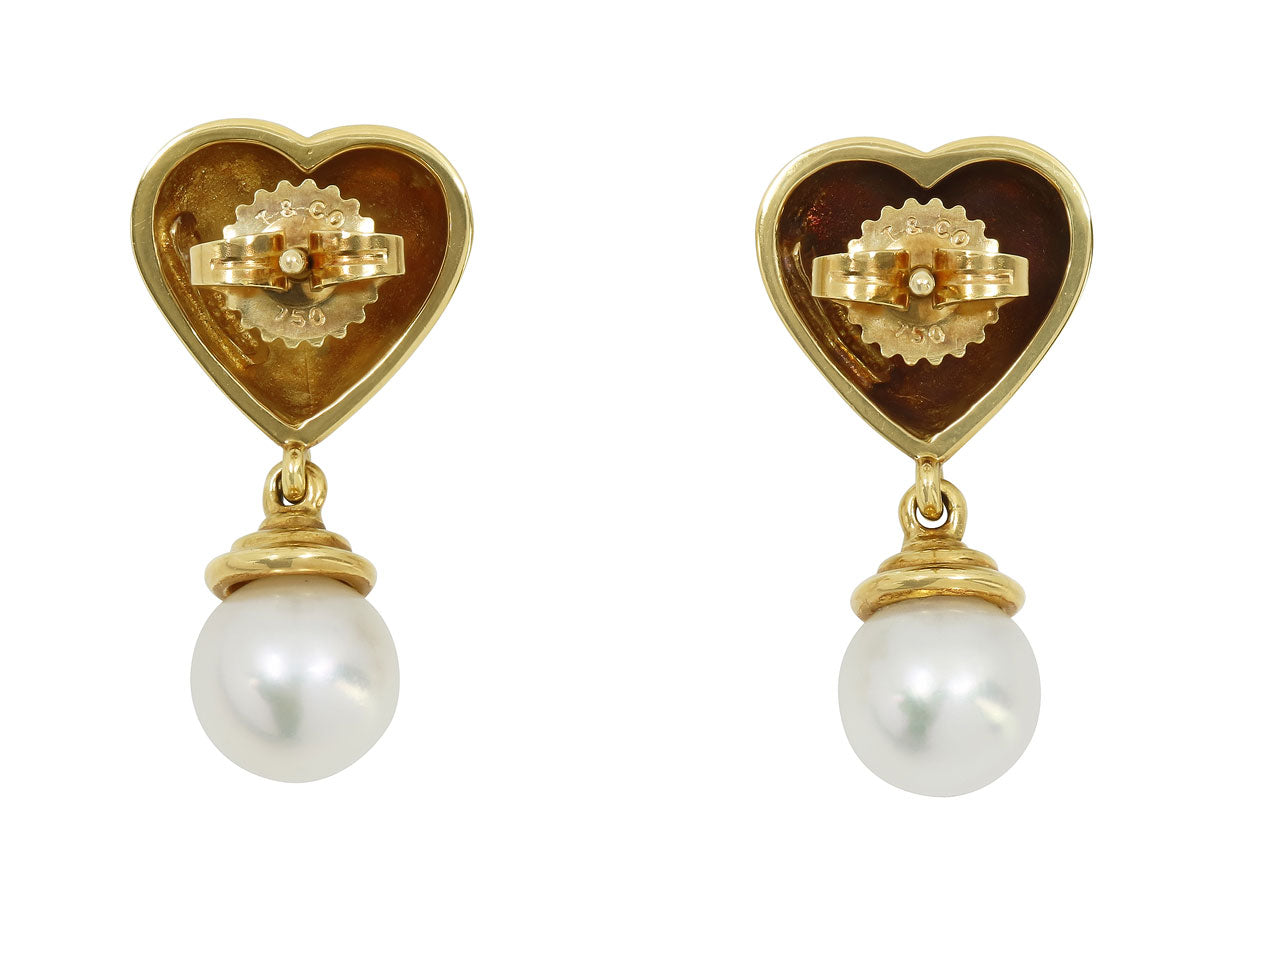 Tiffany & Co. Pearl and Heart Earrings